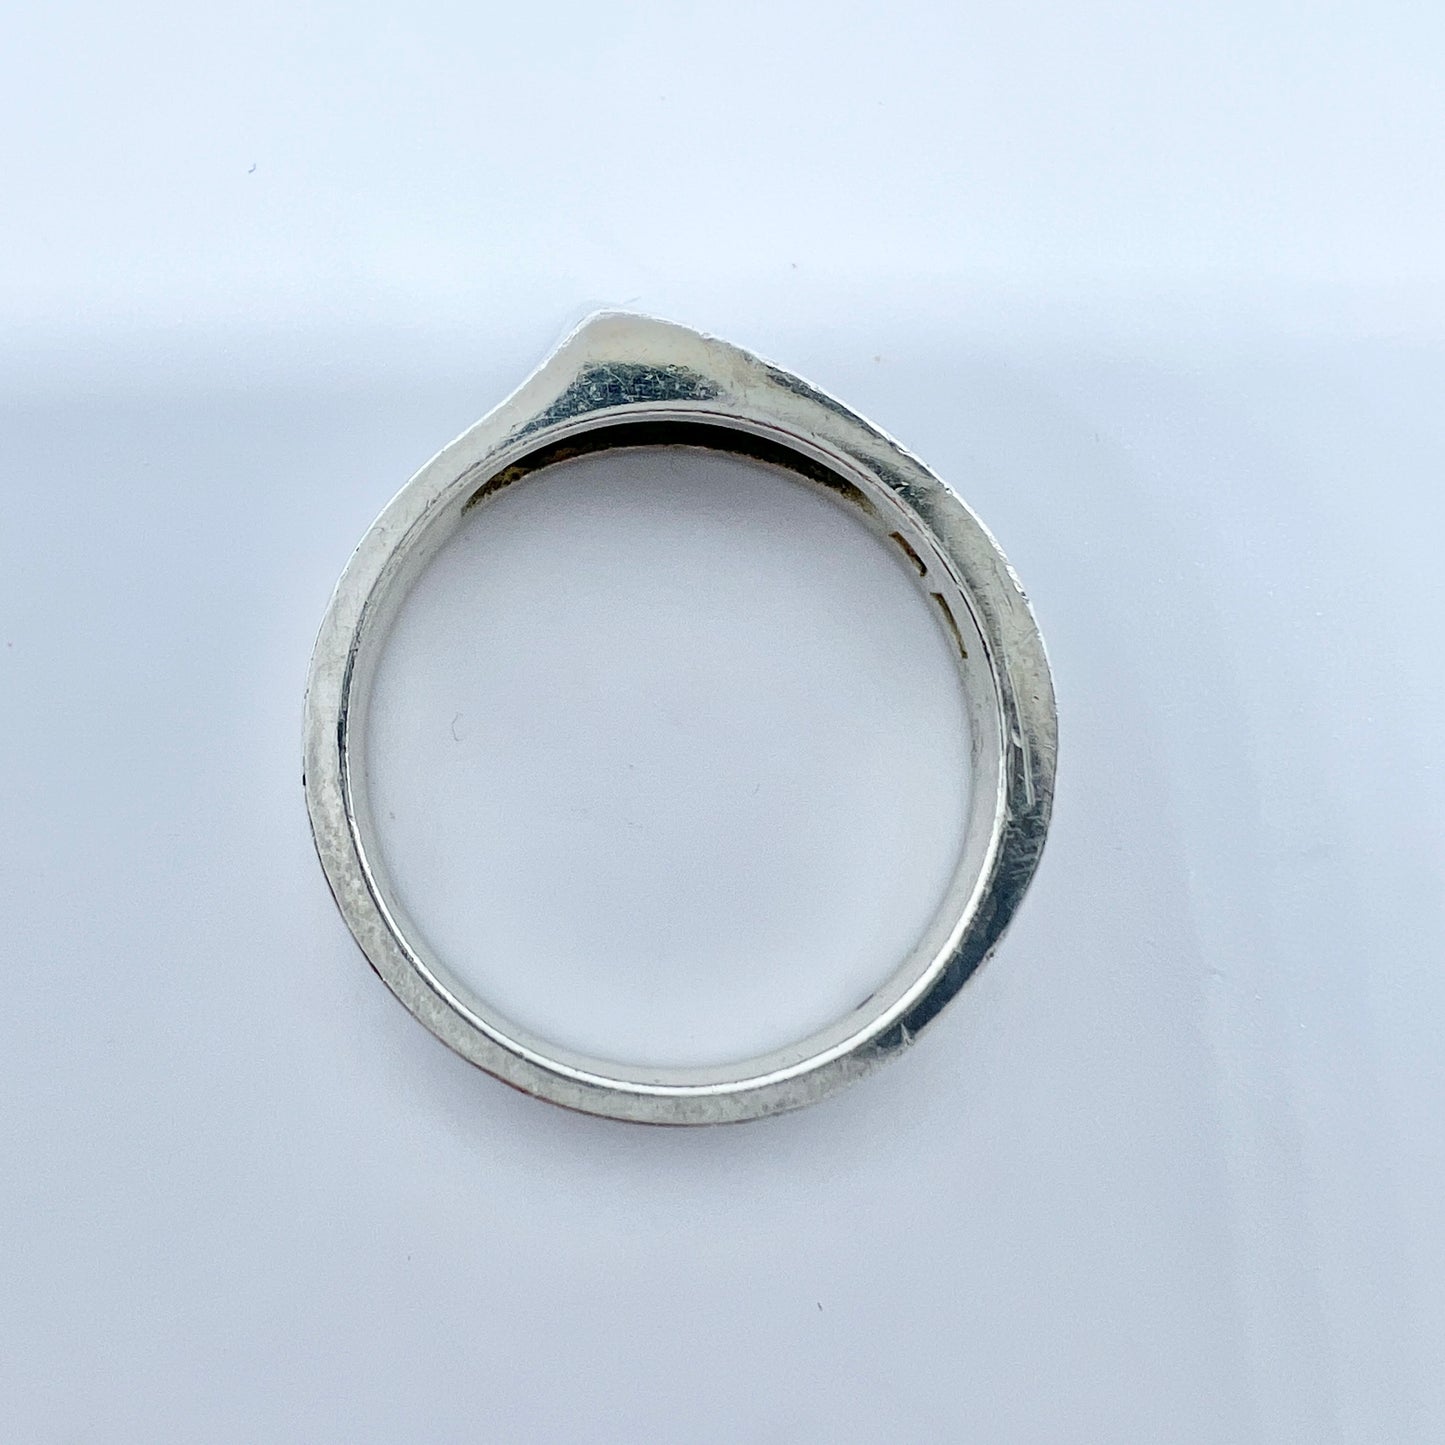 Kaunis Koru, Finland. Vintage Sterling Silver Ring.